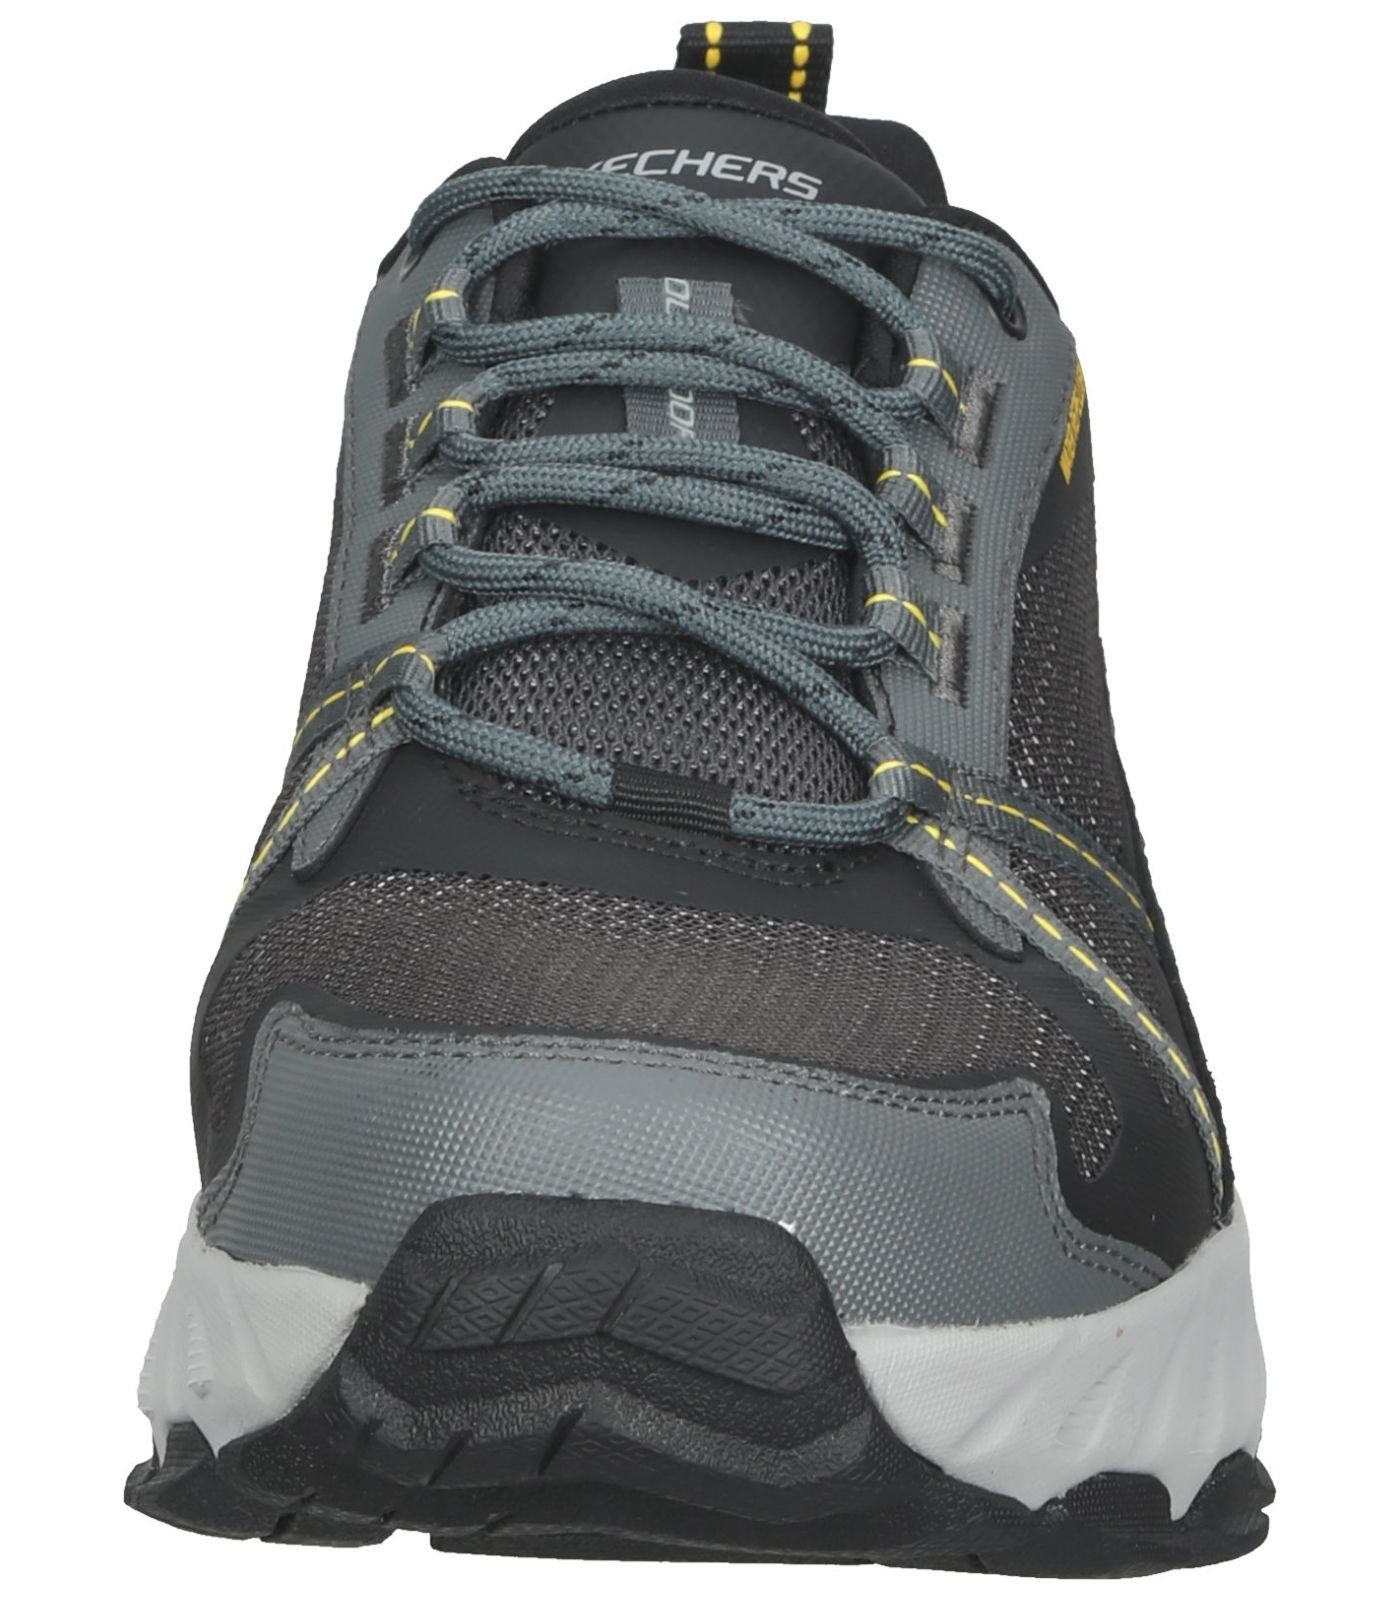 Skechers Sneaker Leder / Trim Schwarz Mesh-Charcoal Sneaker Leather-Synthetic - Black BKCC